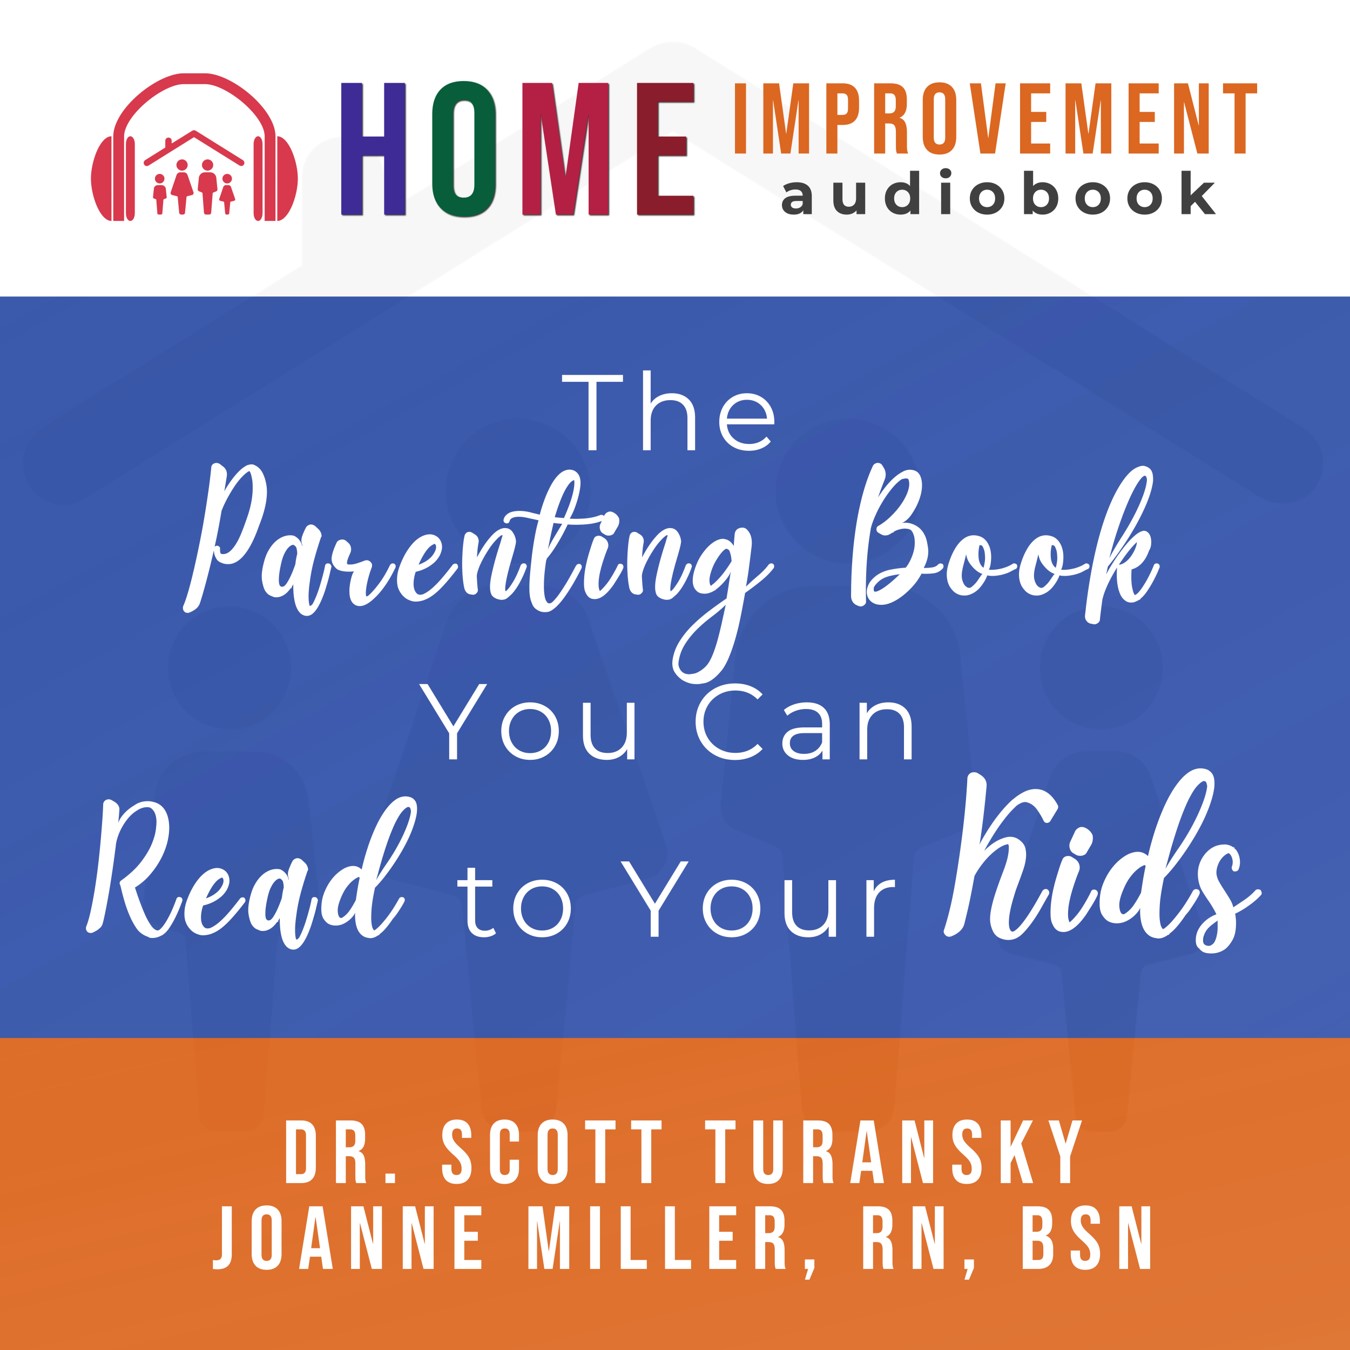 Home Improvement Audiobook